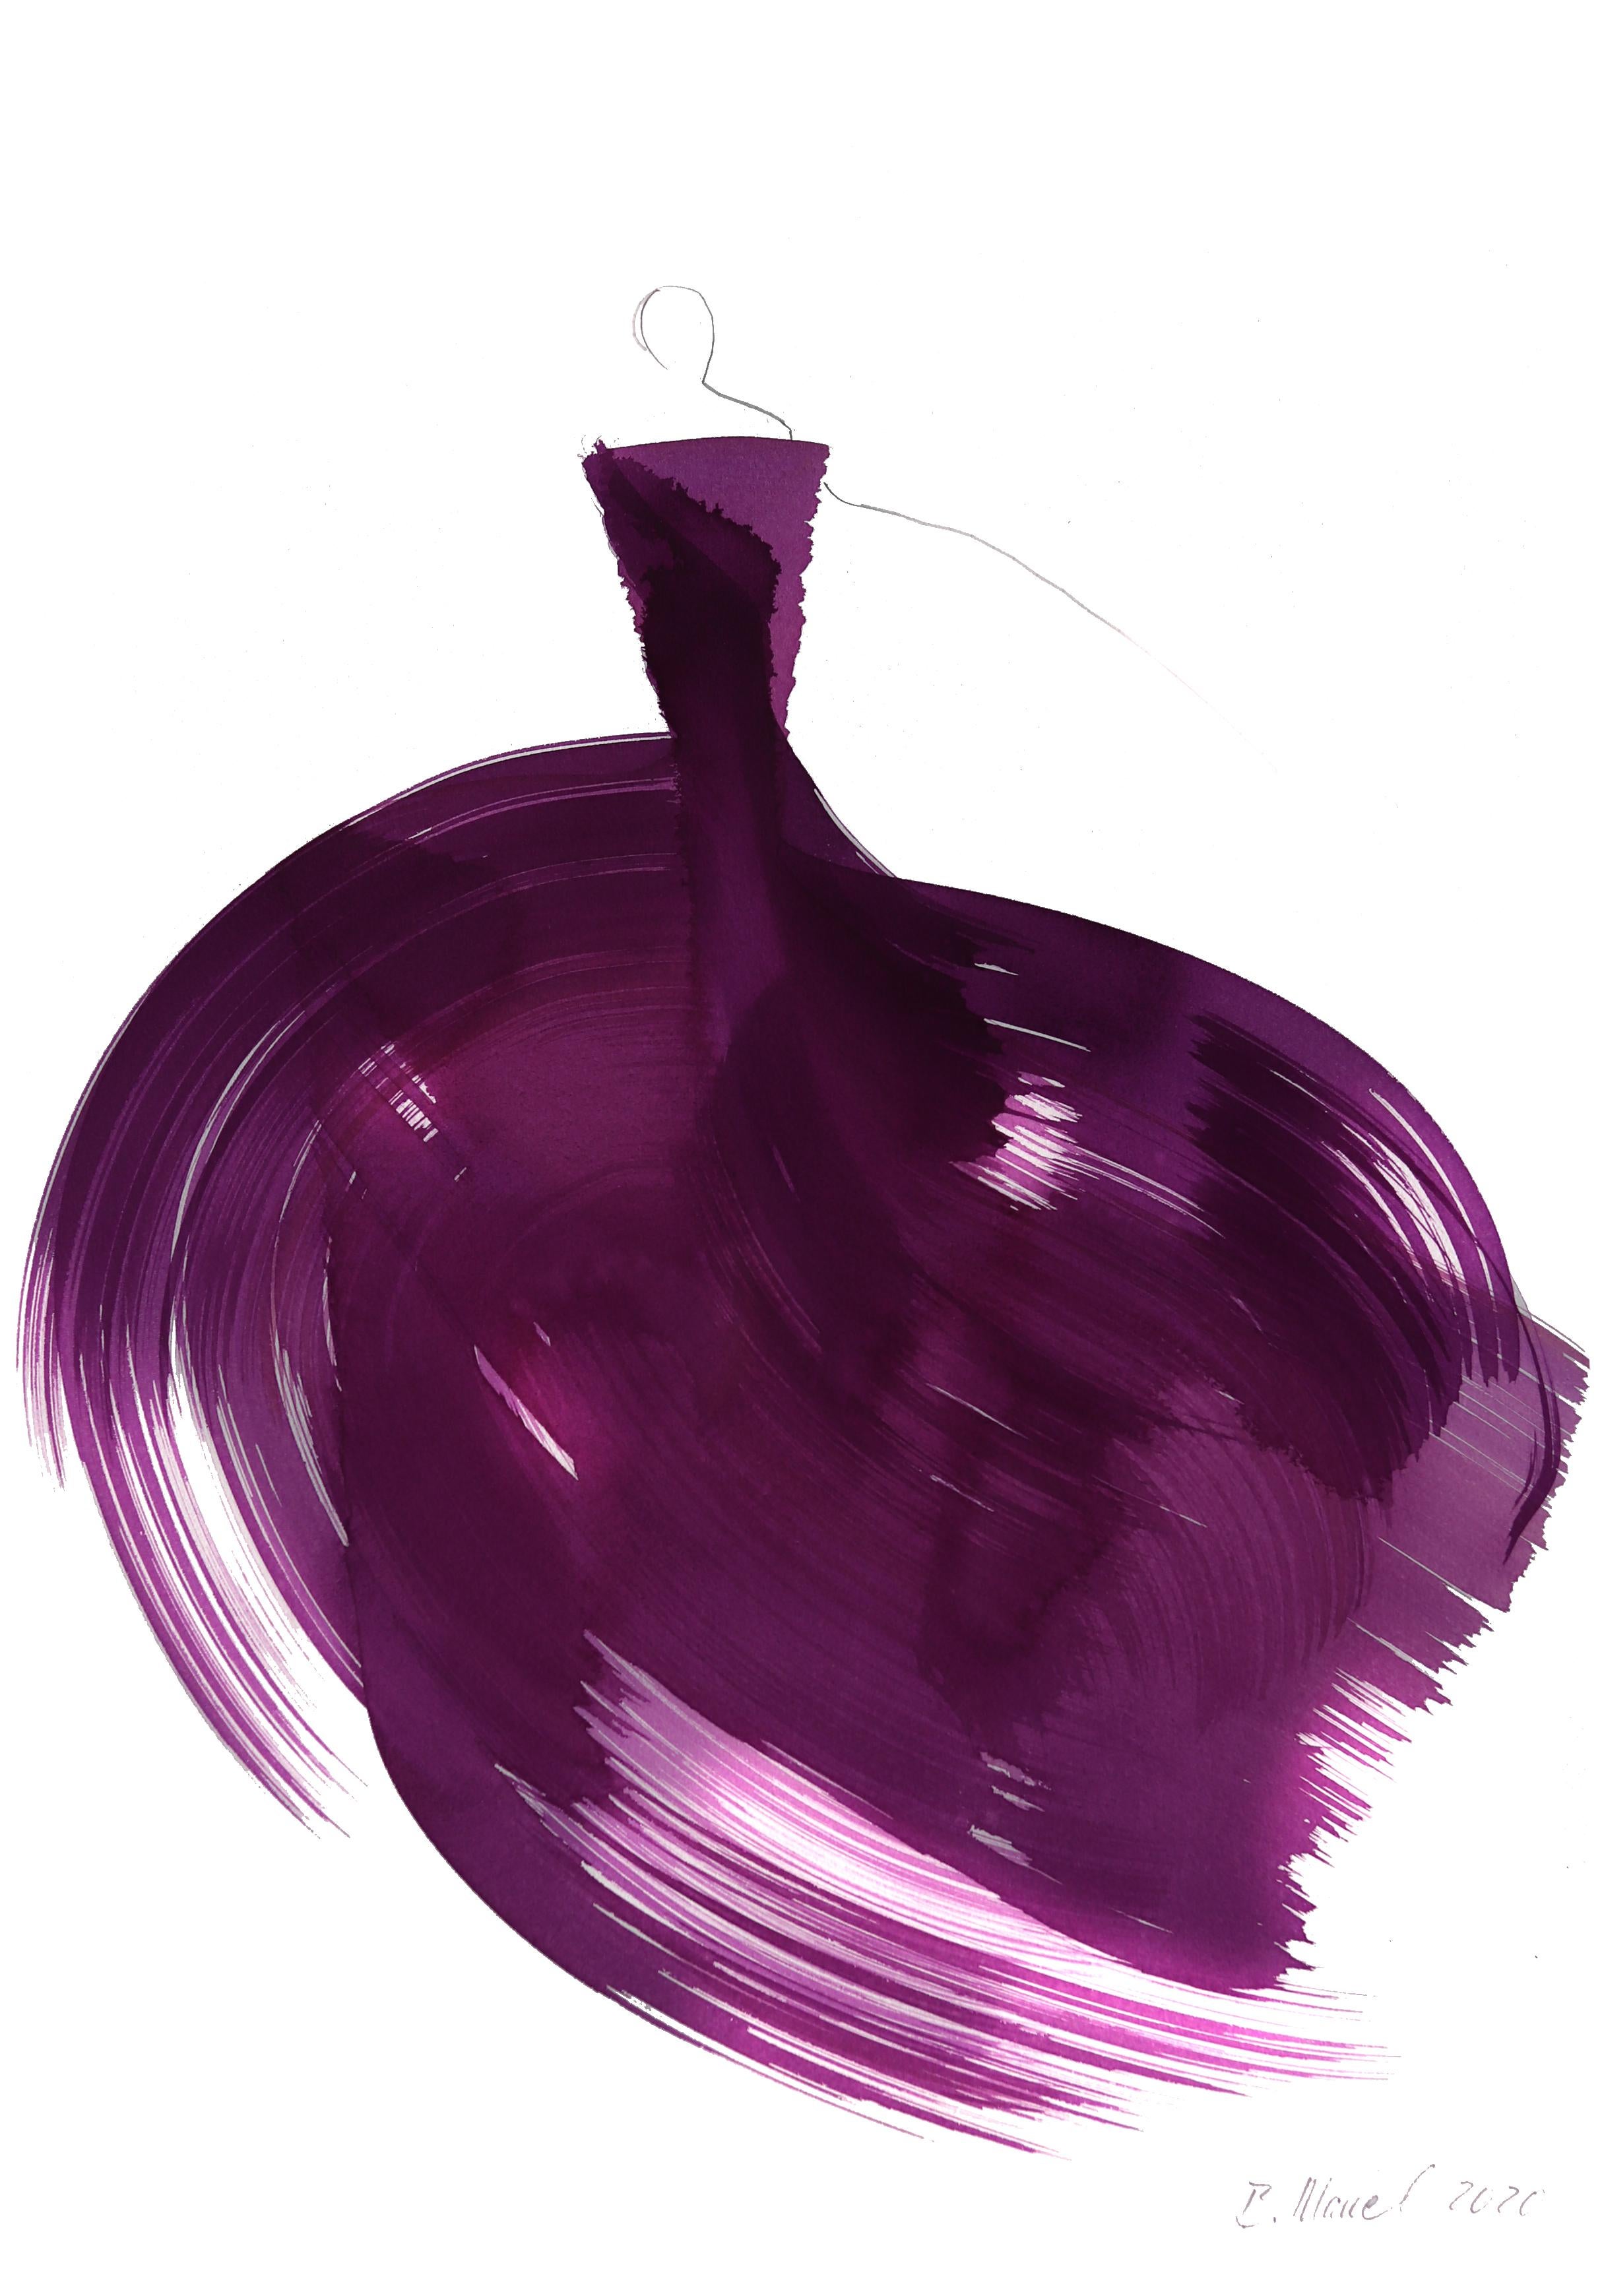 Bettina Mauel Abstract Painting - The Purple Dress 3 - Original Ink Artwork